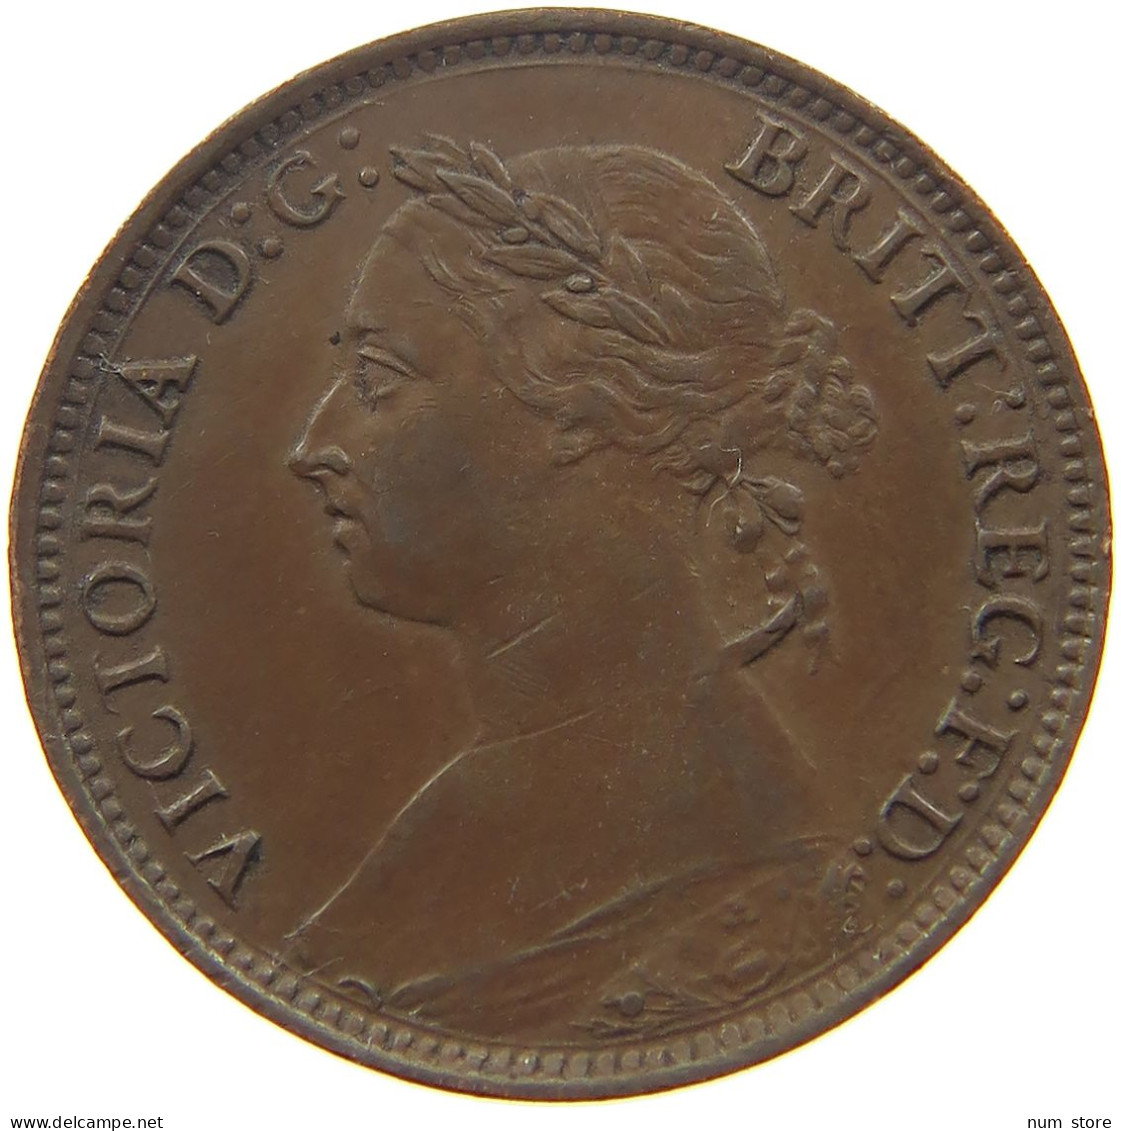 GREAT BRITAIN FARTHING 1886 Victoria 1837-1901 #s052 0013 - B. 1 Farthing